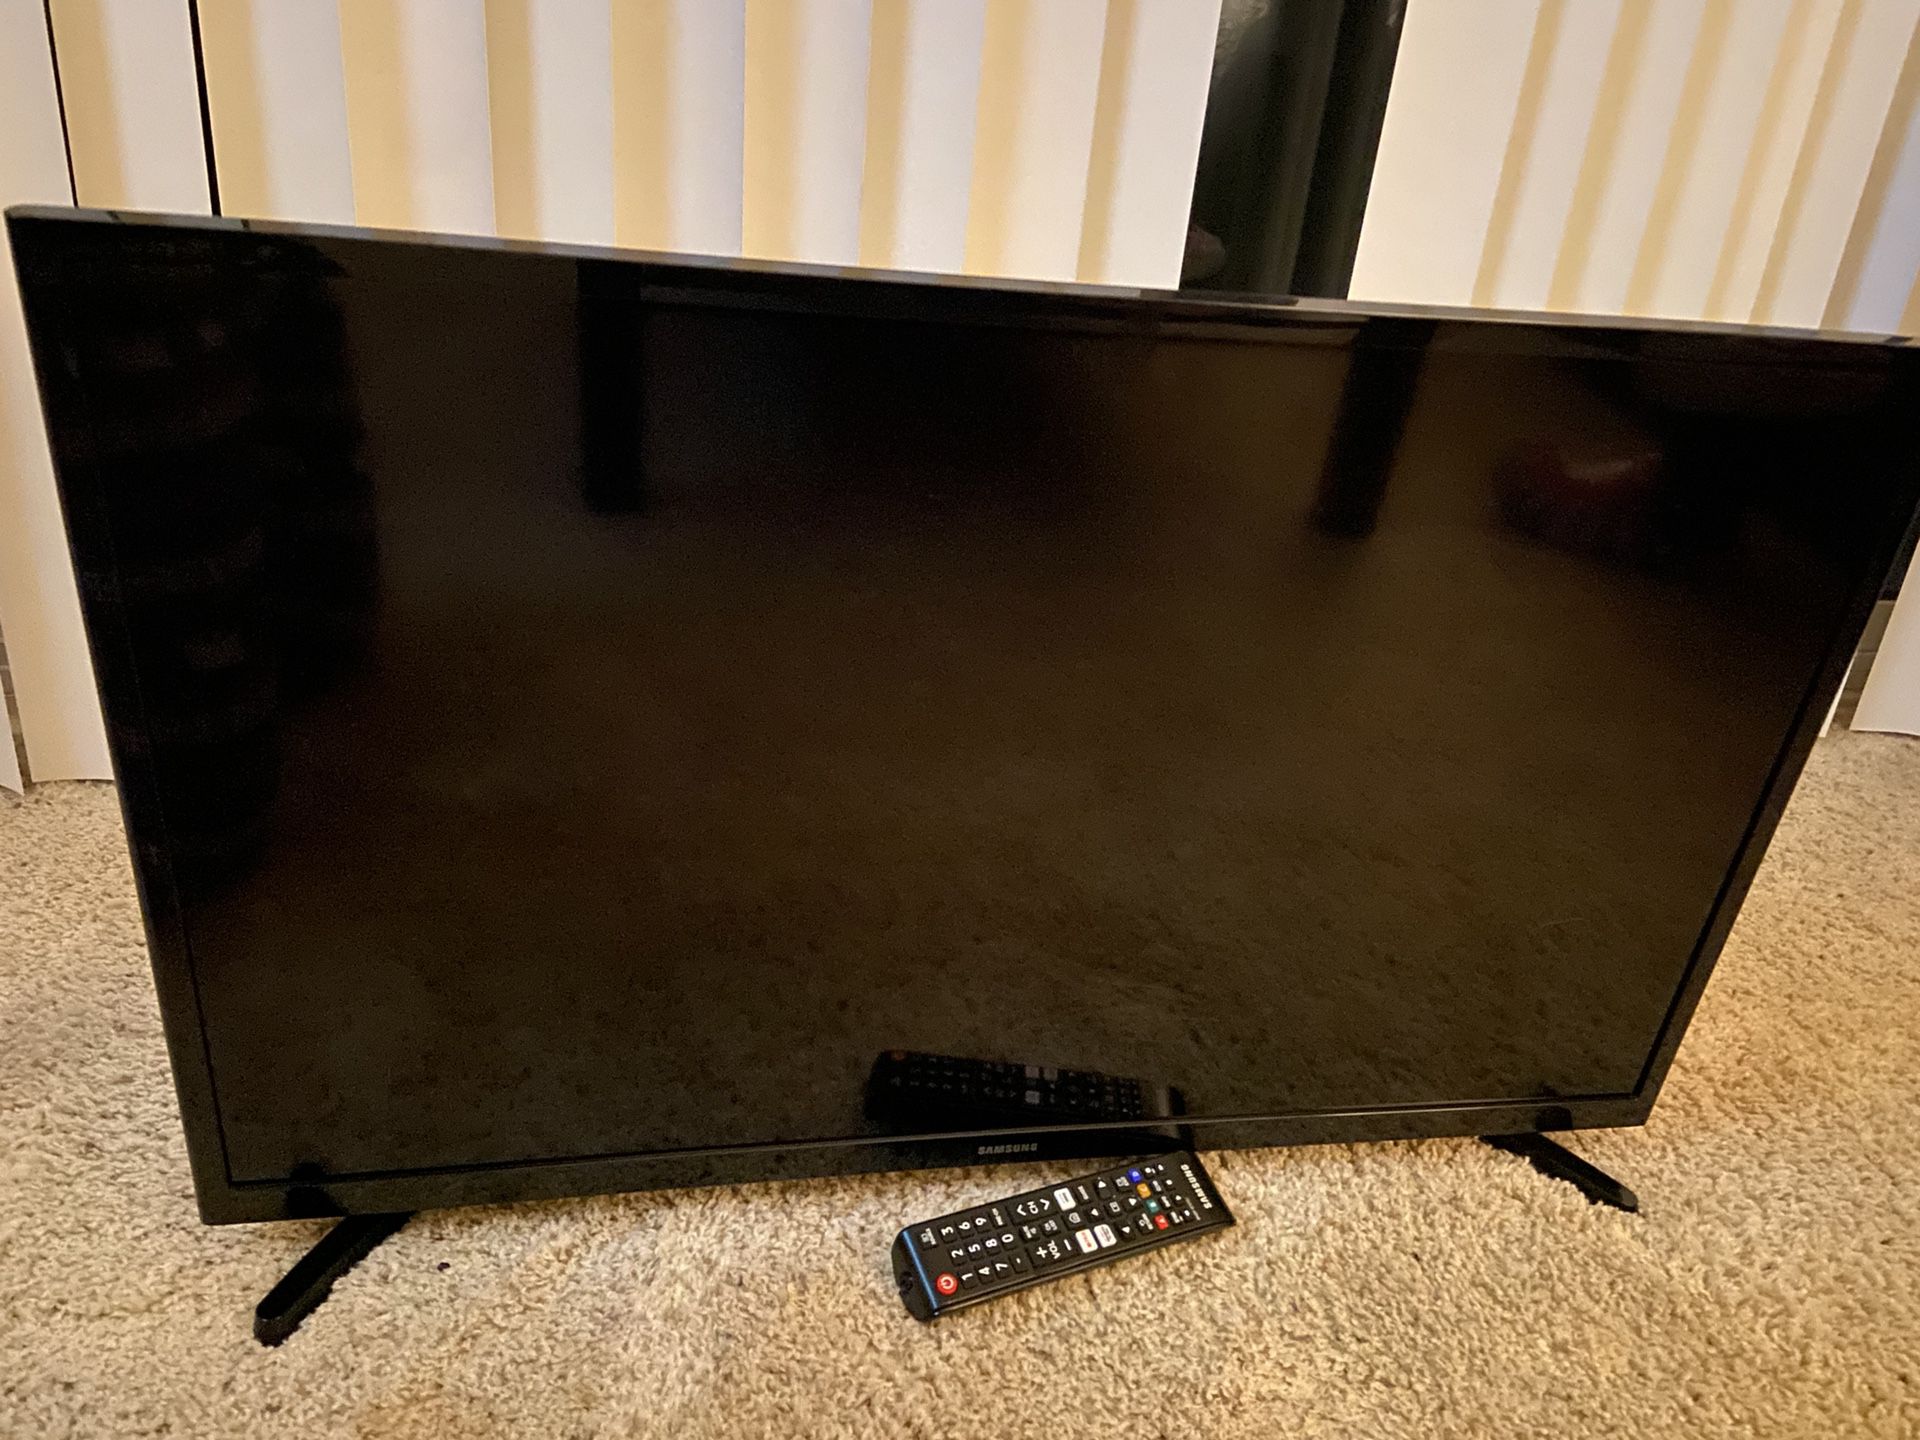 Samsung LED TV “32” Inch